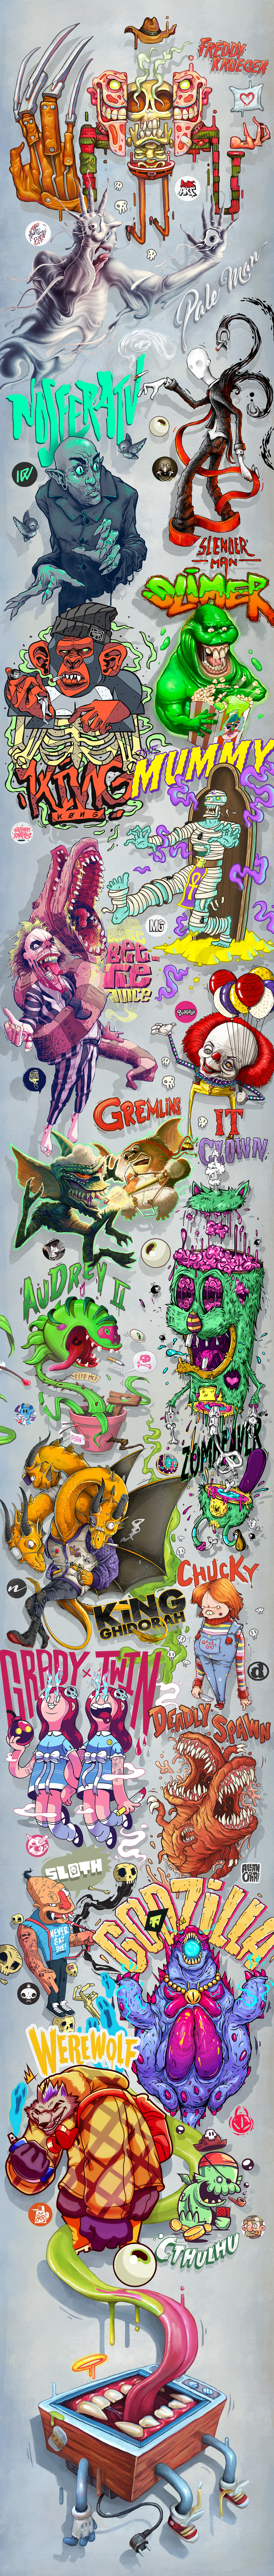 streetart Collaboration art Movies monsters horror hill freddy krueger Werewolf poster